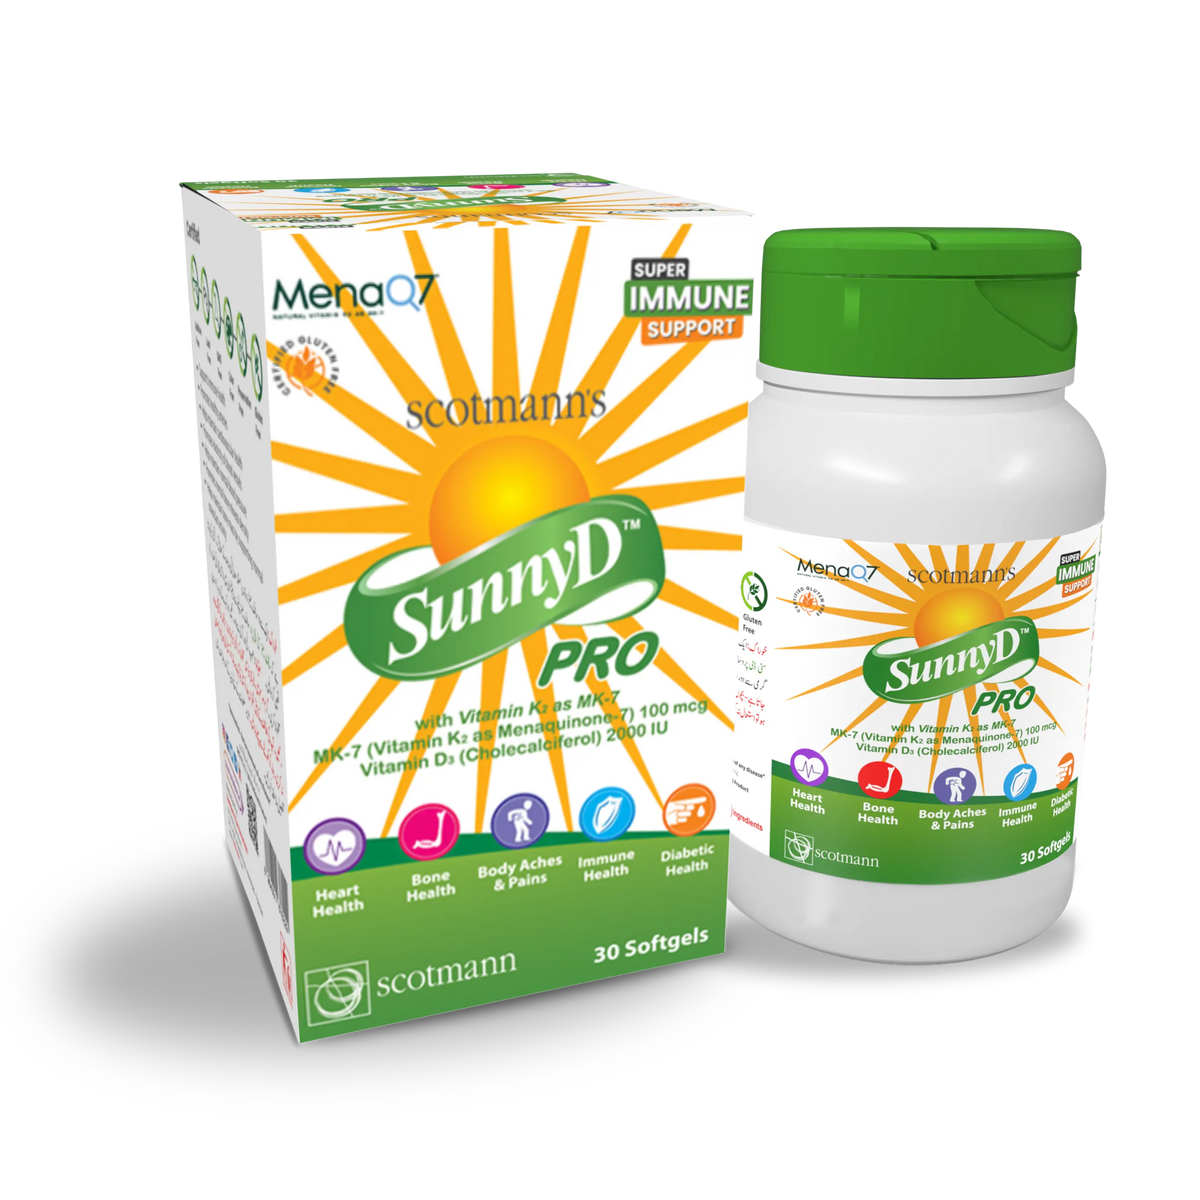 Scotmann’s SunnyD PRO - Vitamin D3 & K2 Softgels